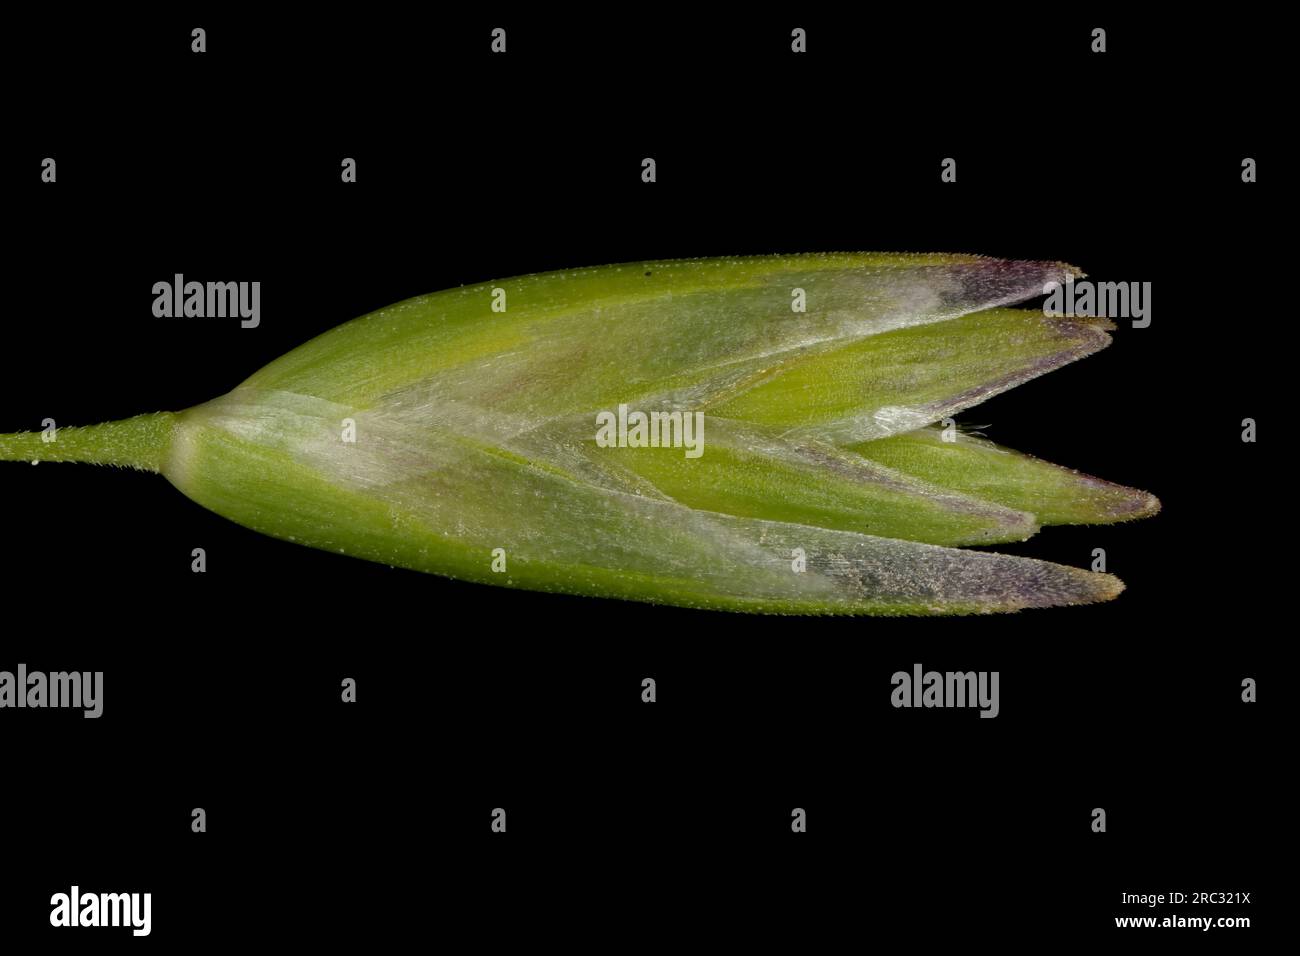 Heath Grass (Danthonia decumbens). Isolated Spikelet Closeup Stock Photo